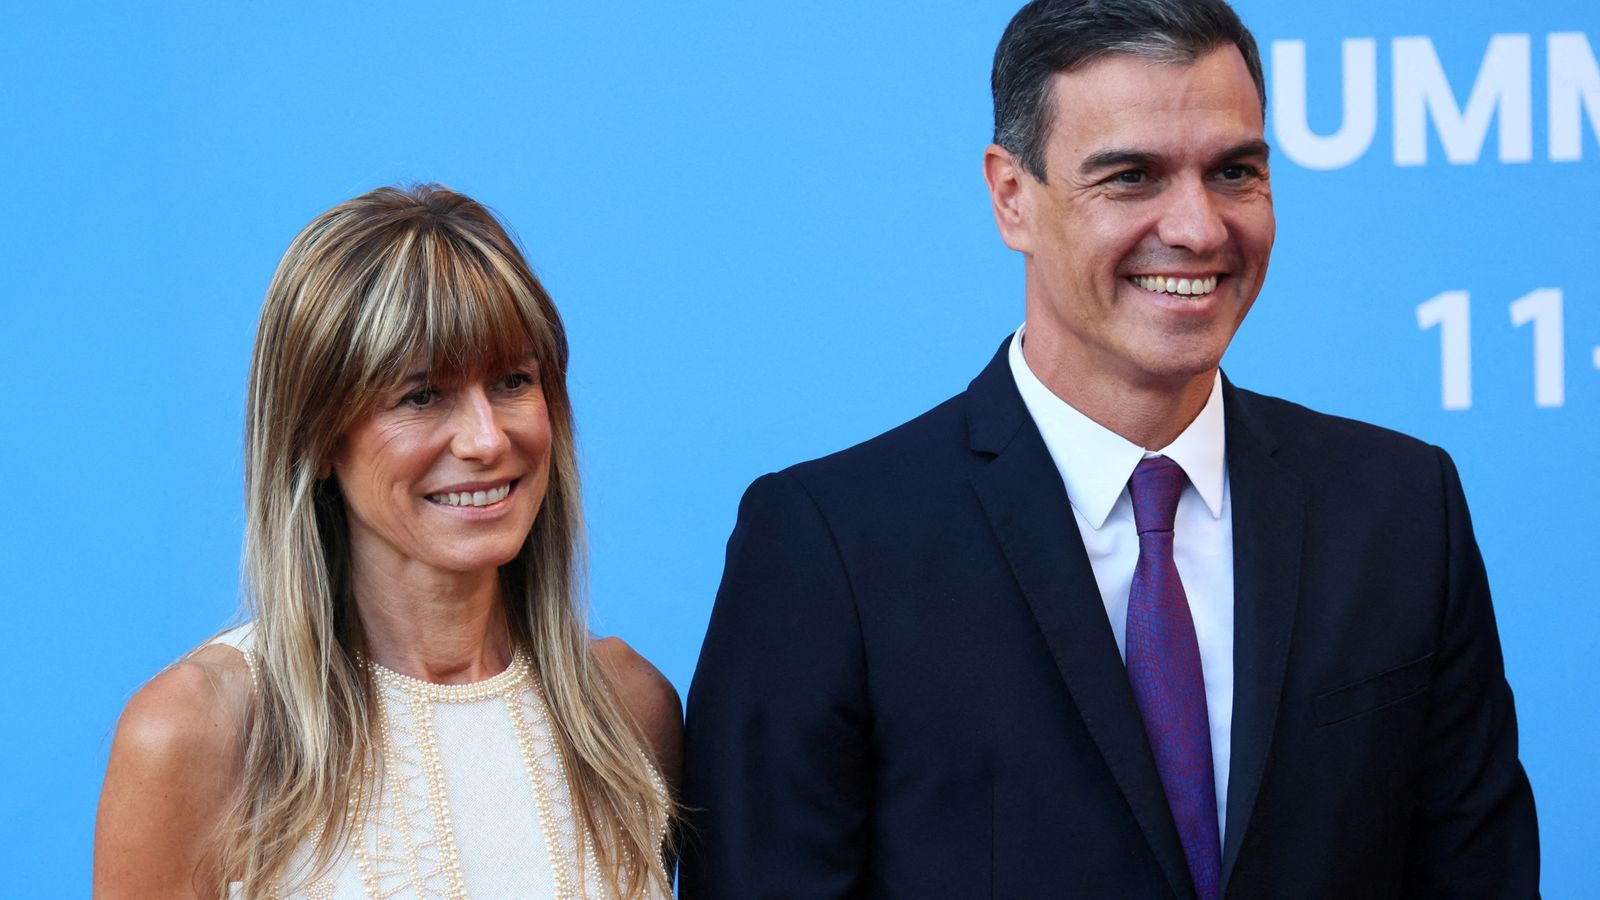 Pedro Sanchez decides to stay as Spain's prime minister despite corruption claims against wife